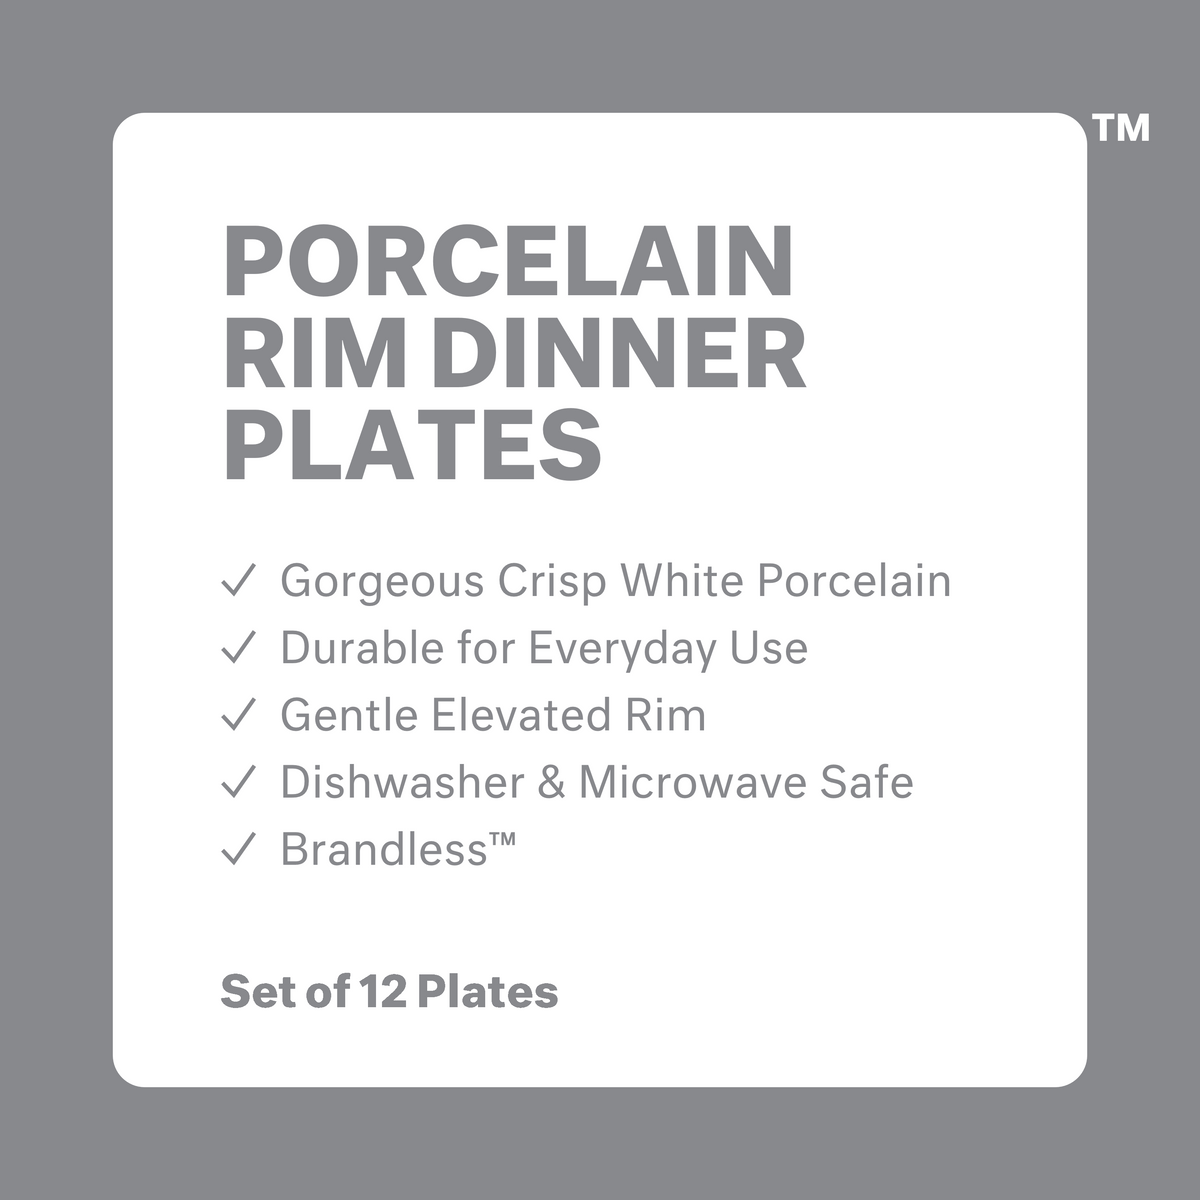 Porcelain rim dinner plates: gorgeous crisp white porcelain, durable for everyday use, gentle elevated rim, dishwasher and microwave safe, Brandless. Set of 12 plates.